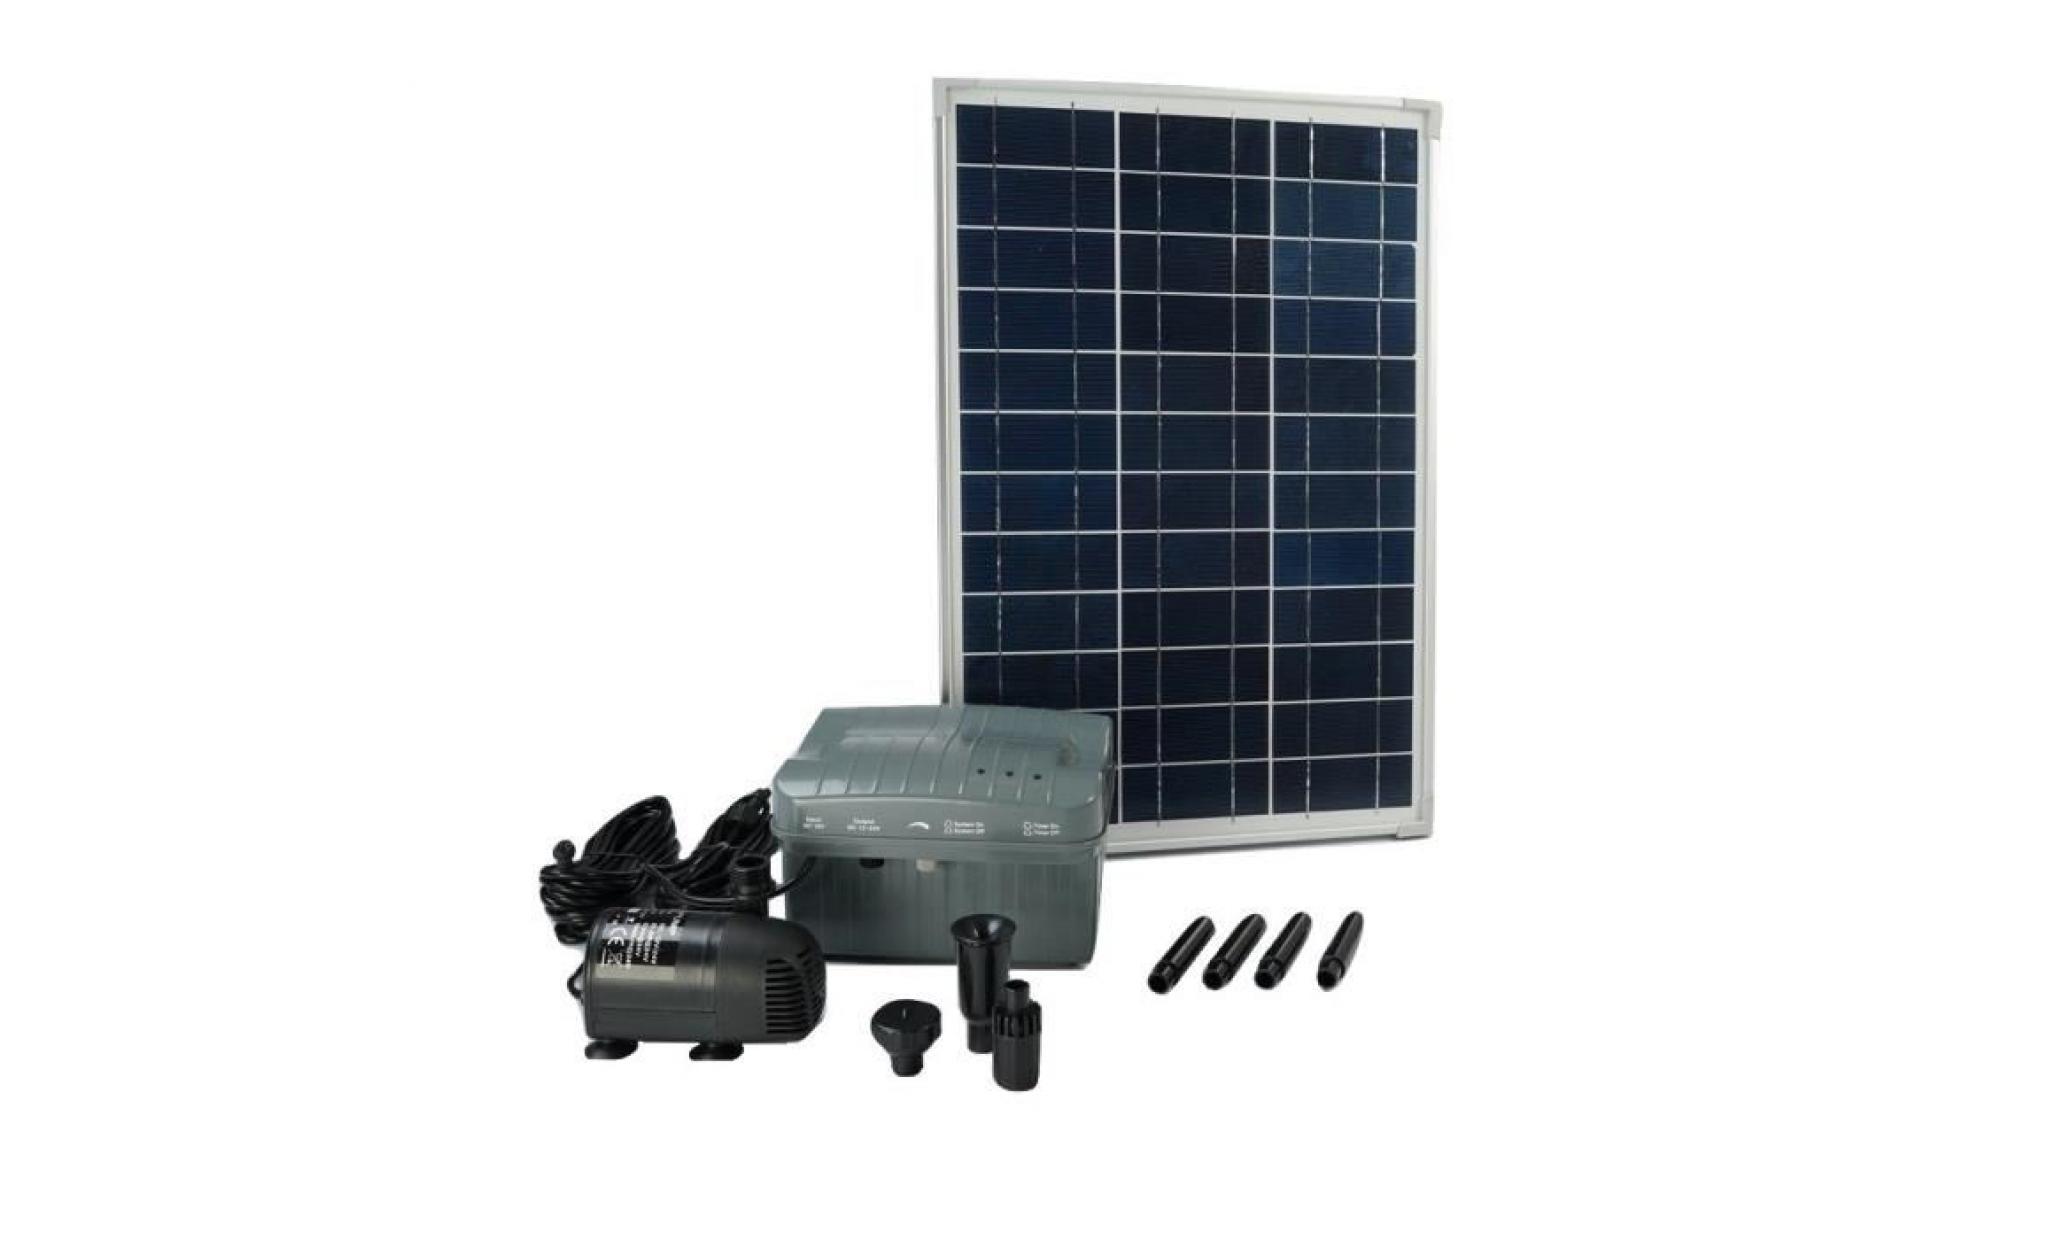 Pompe solaire pour bassin SolarMax 1000 - 20 W